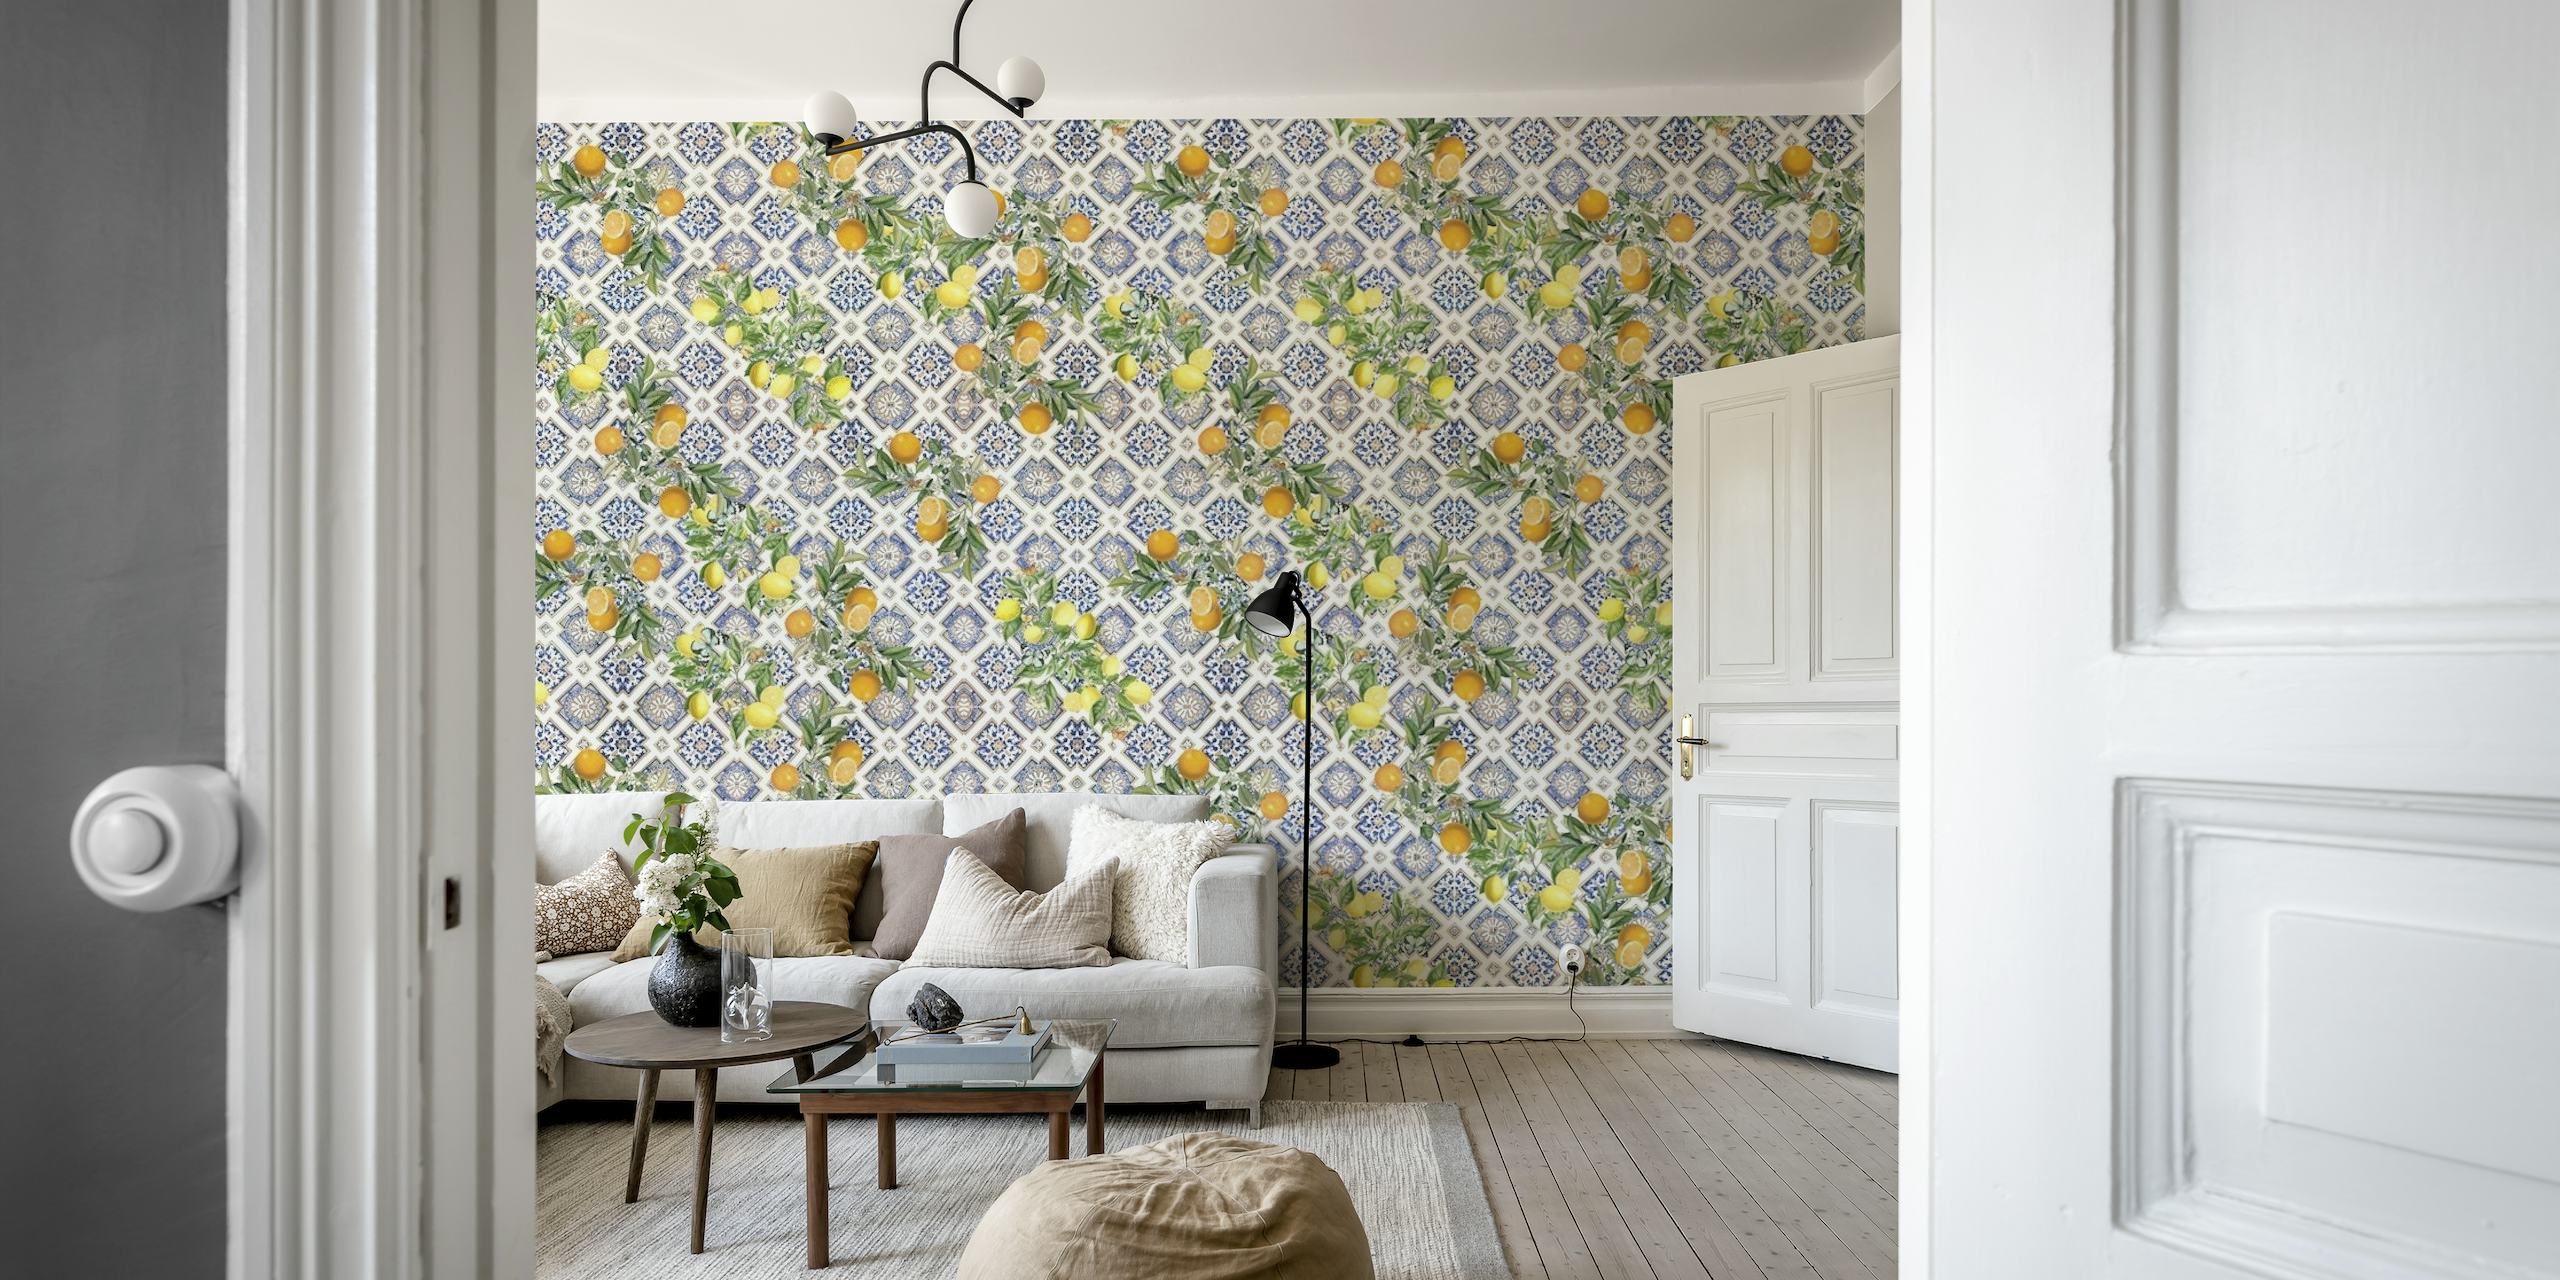 Mediterranean Blue tiles and citrus fruit pattern ταπετσαρία